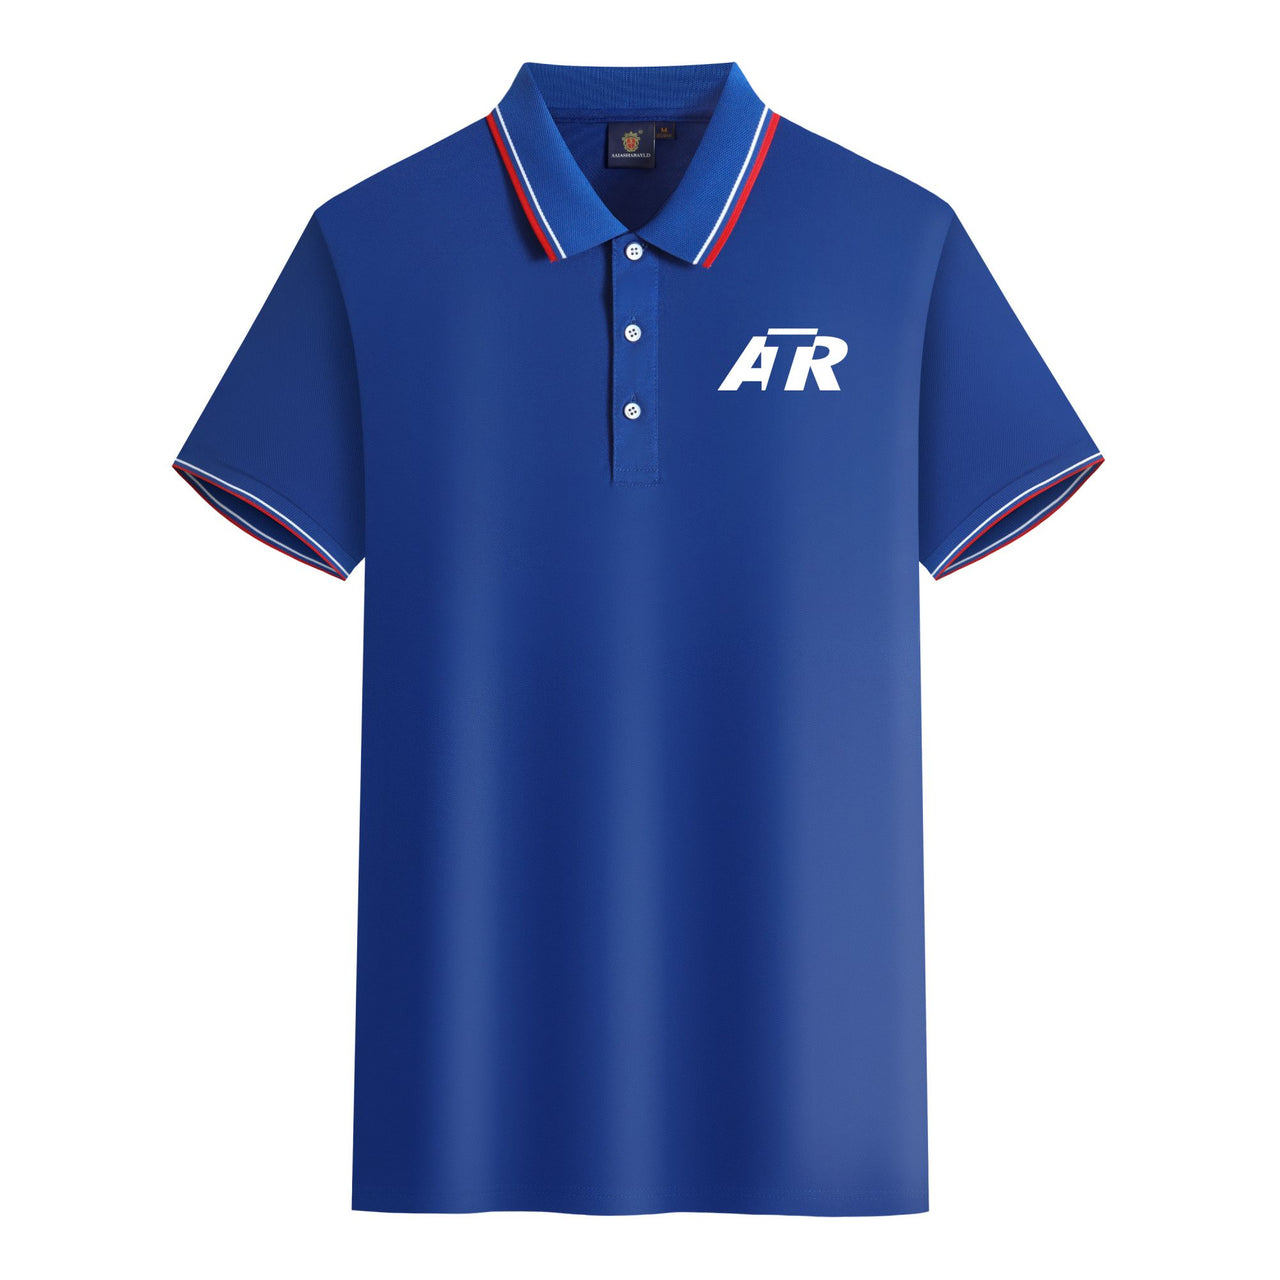 ATR & Text Designed Stylish Polo T-Shirts